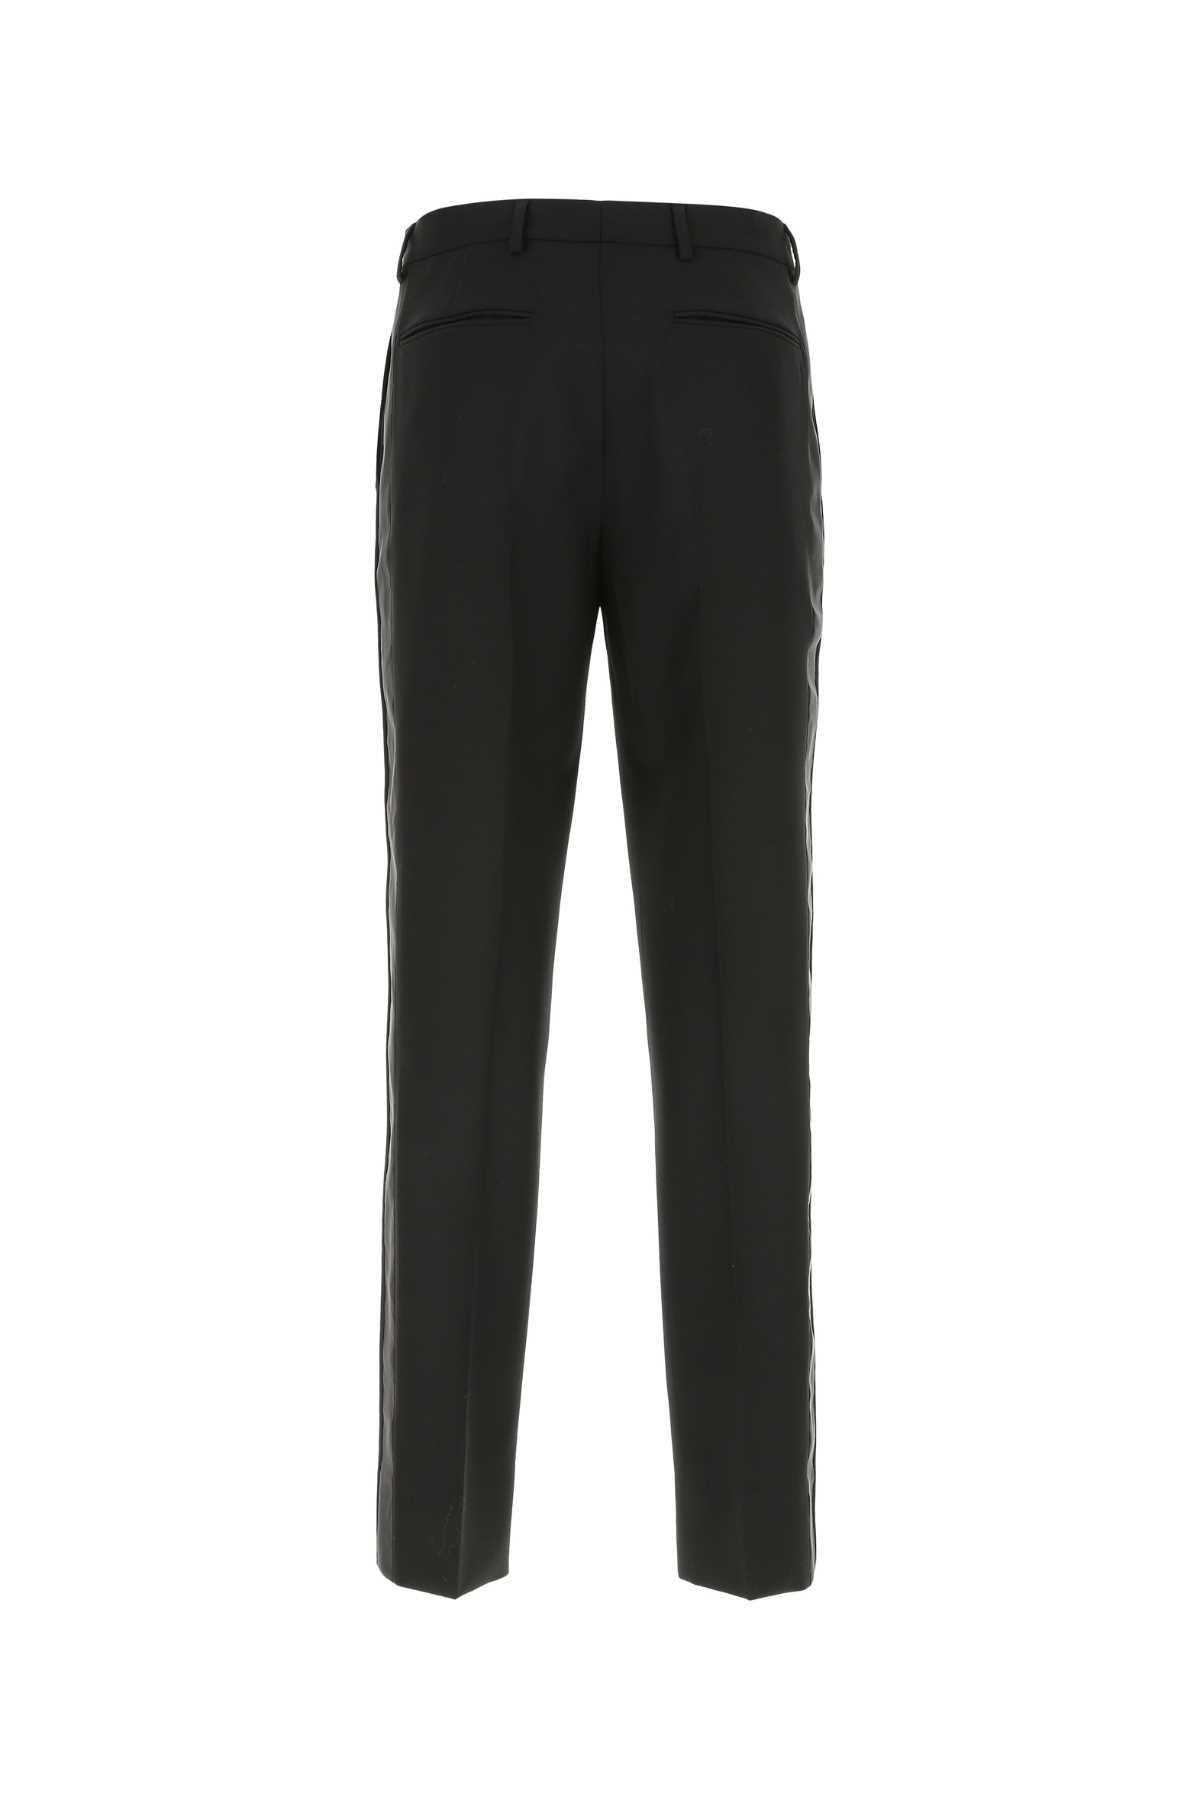 Prada Black Wool Blend Trouser In F0002